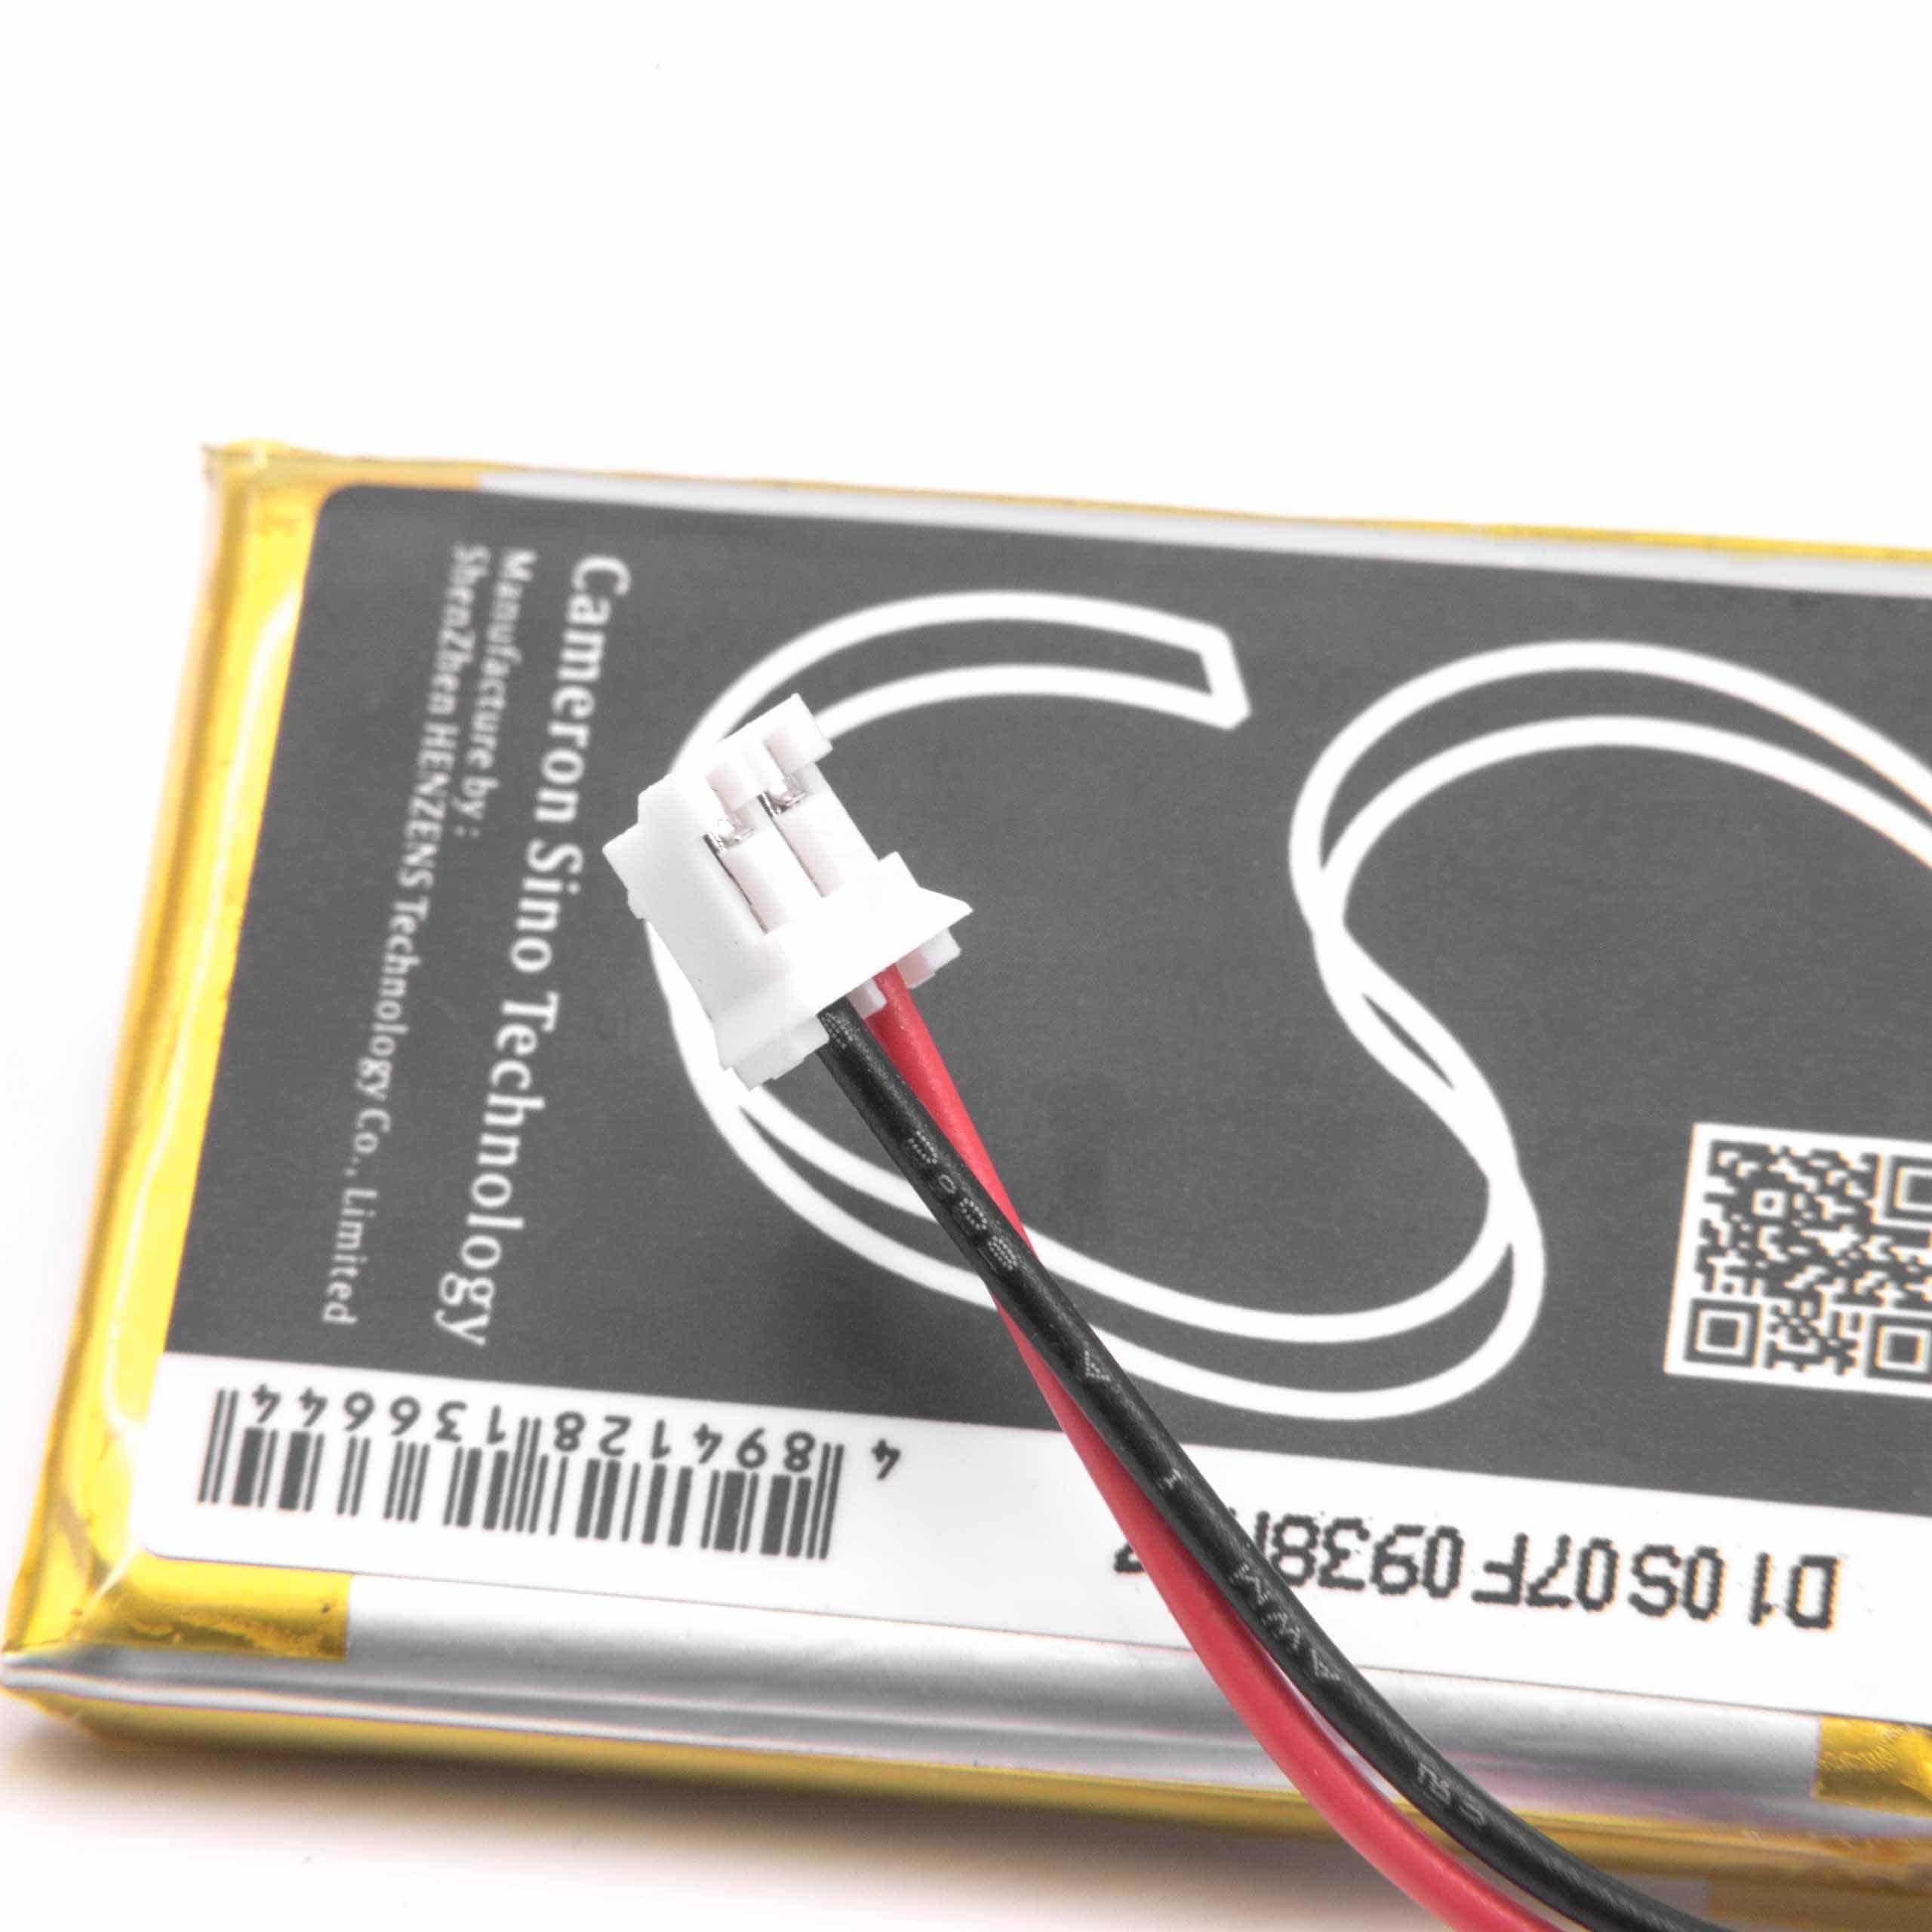 Laser Battery Replacement for Minelab 0303-0036 - 1100mAh 3.7V Li-polymer